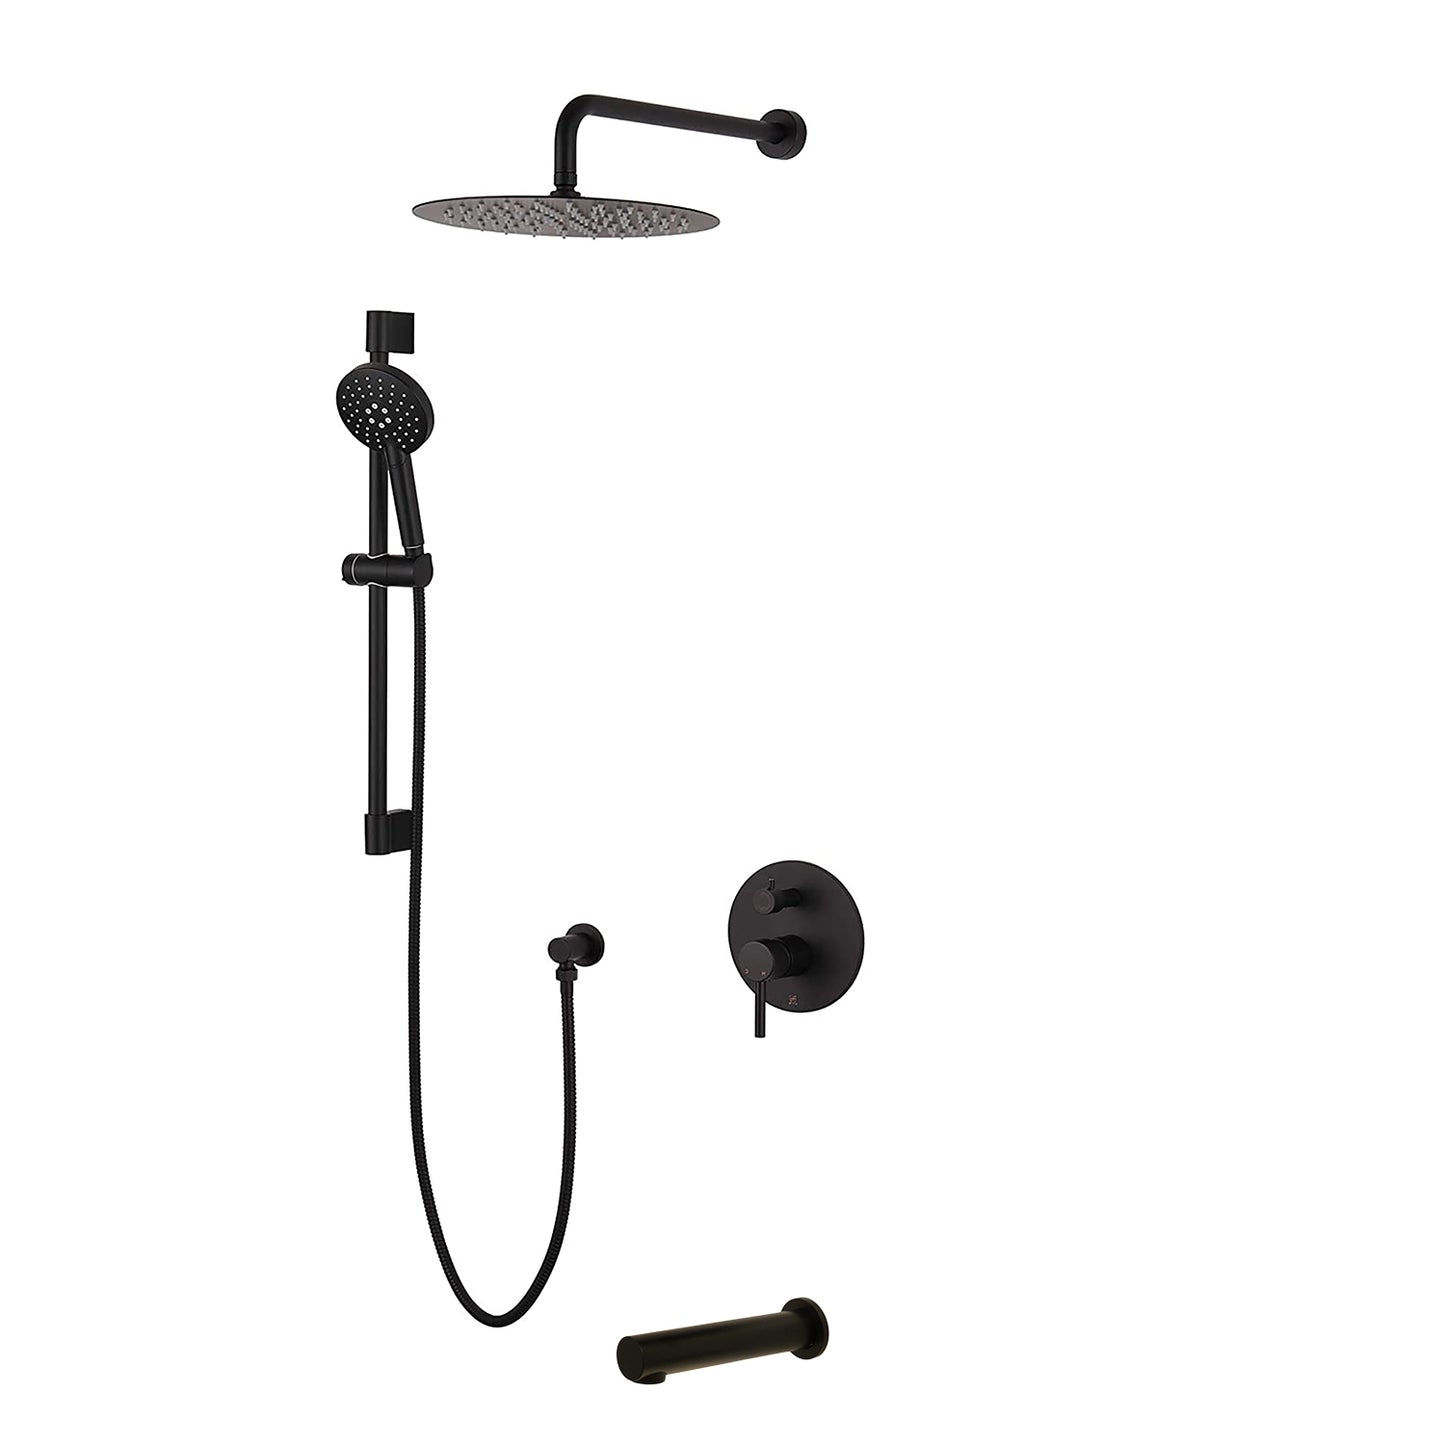 Kodaen Elegante 3 Way Pressure Balanced Shower System With 10" Shower Head And Sliding Bar  F55104